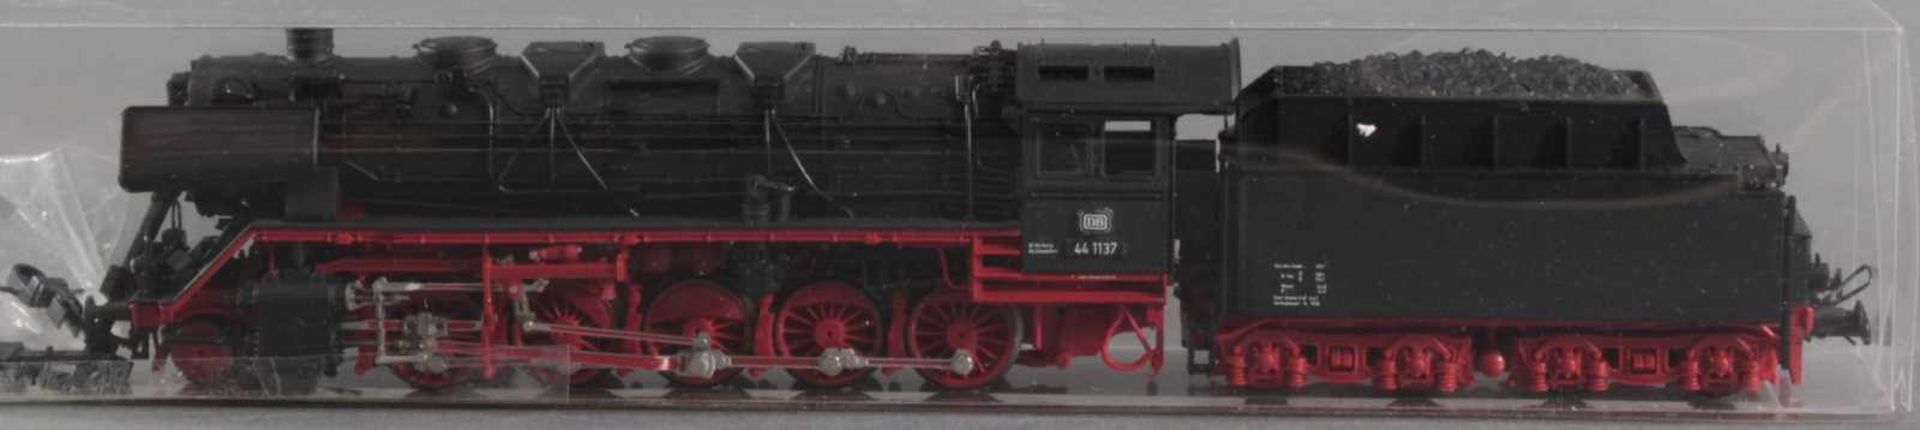 Roco HO Dampflok 44 1137 mit 5 Brawa GüterwaggonsModellnummer der Waggons 47042, 47043, 2052, 2060 - Image 2 of 2